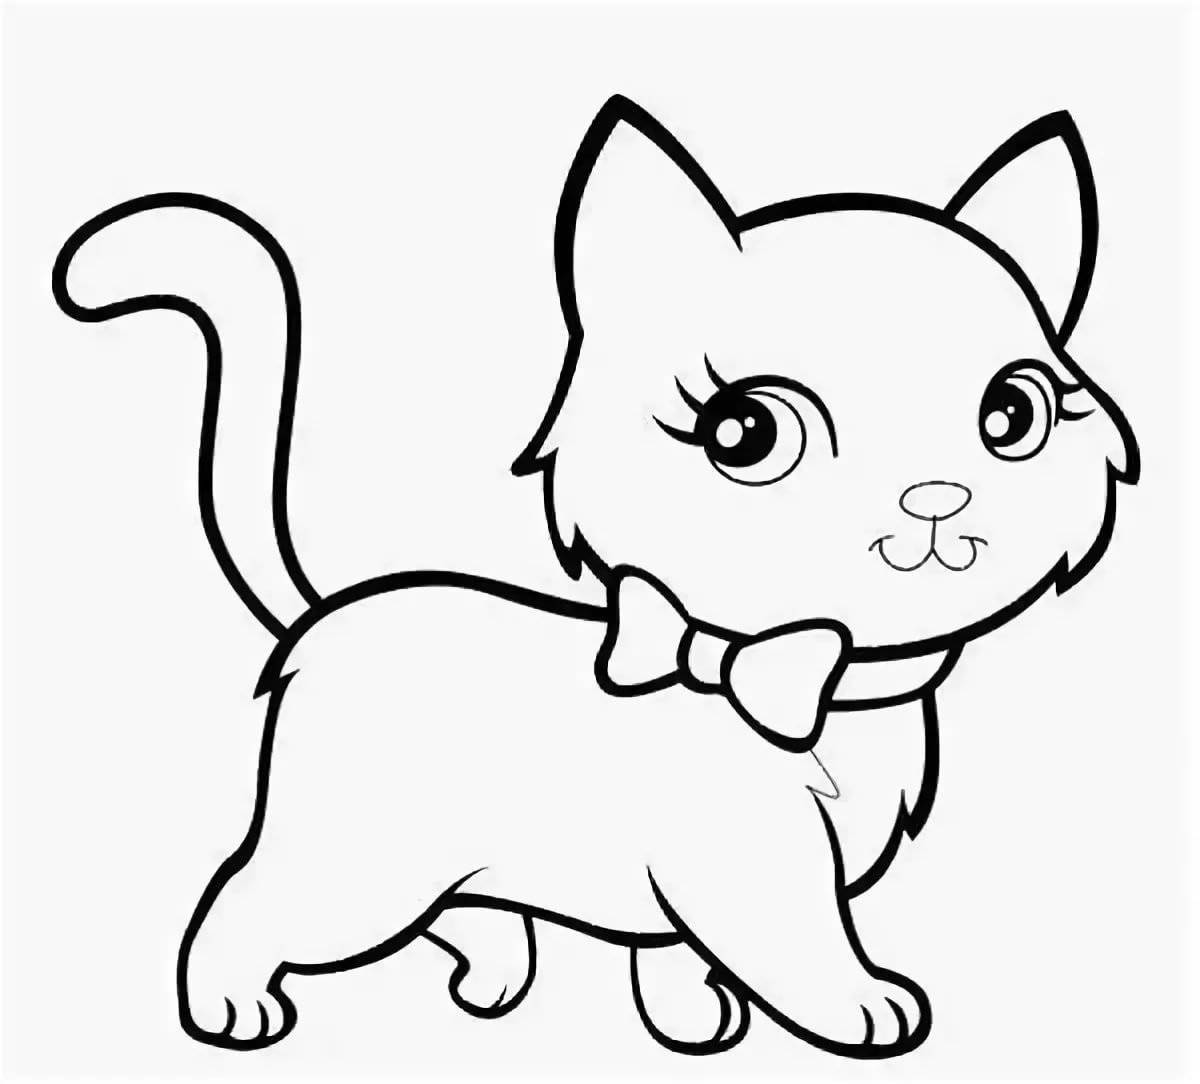 Cute kitten coloring book